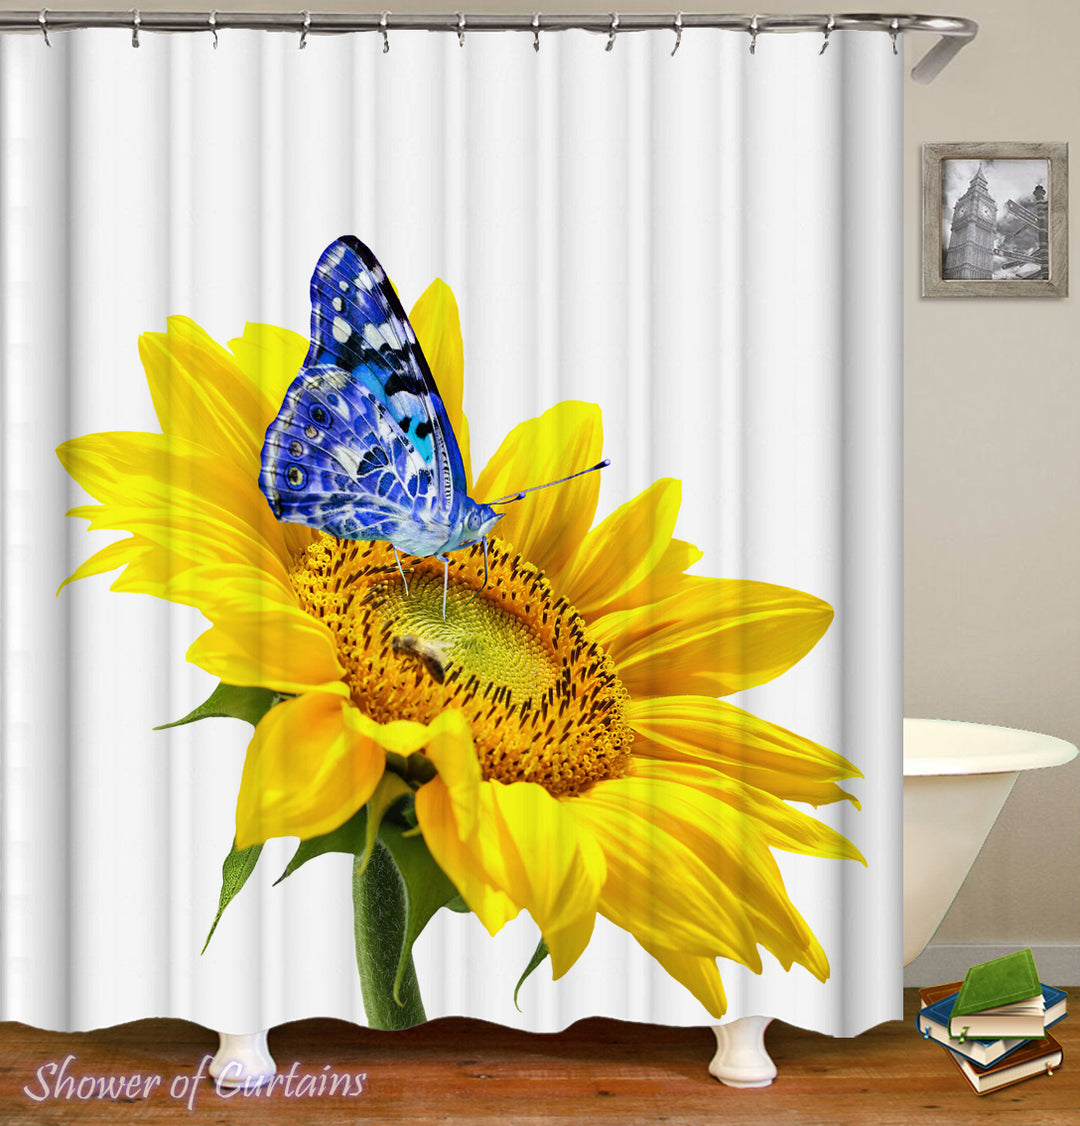 Blue Against Yellow Sunflower shower curtain